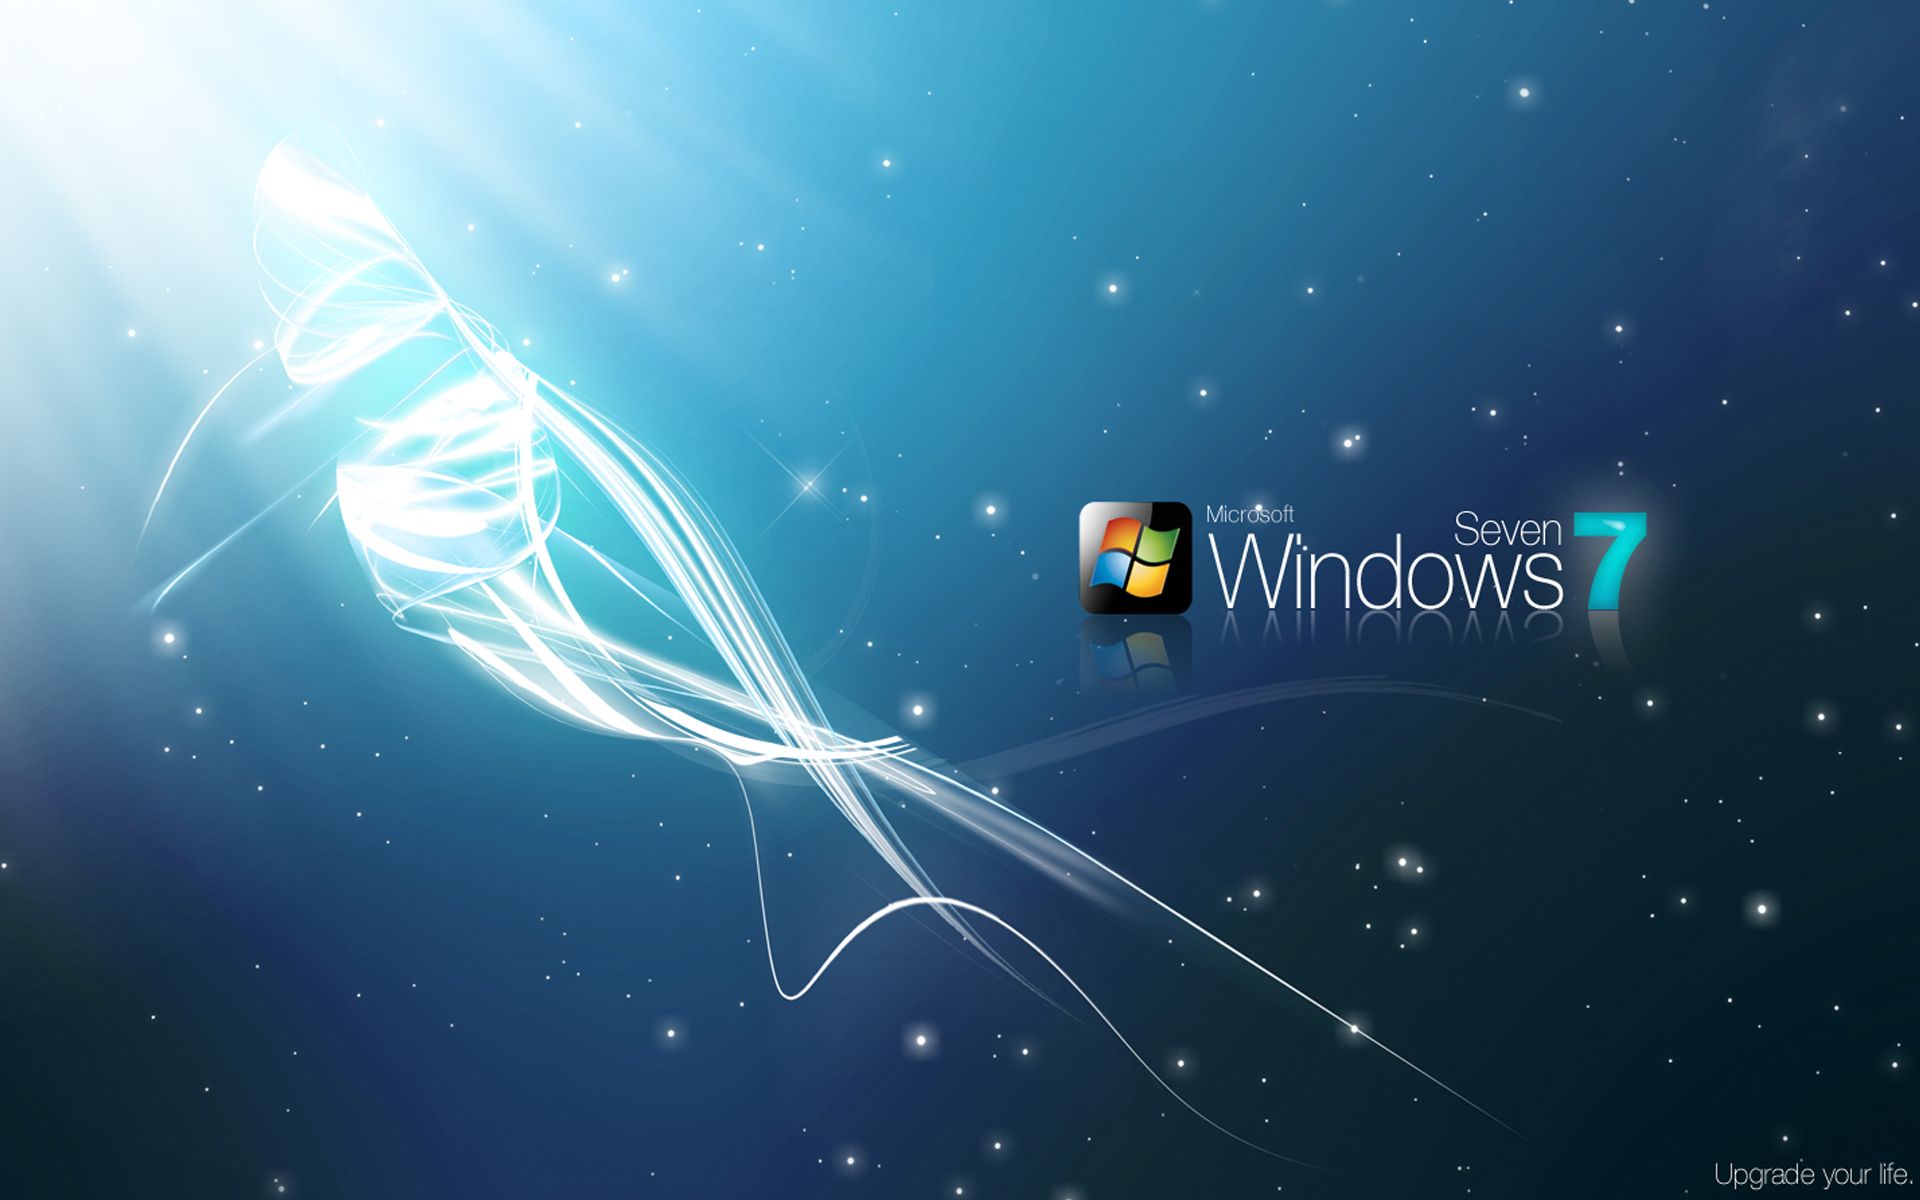 Download Windows 7 HD Wallpaper Free By udhao.net